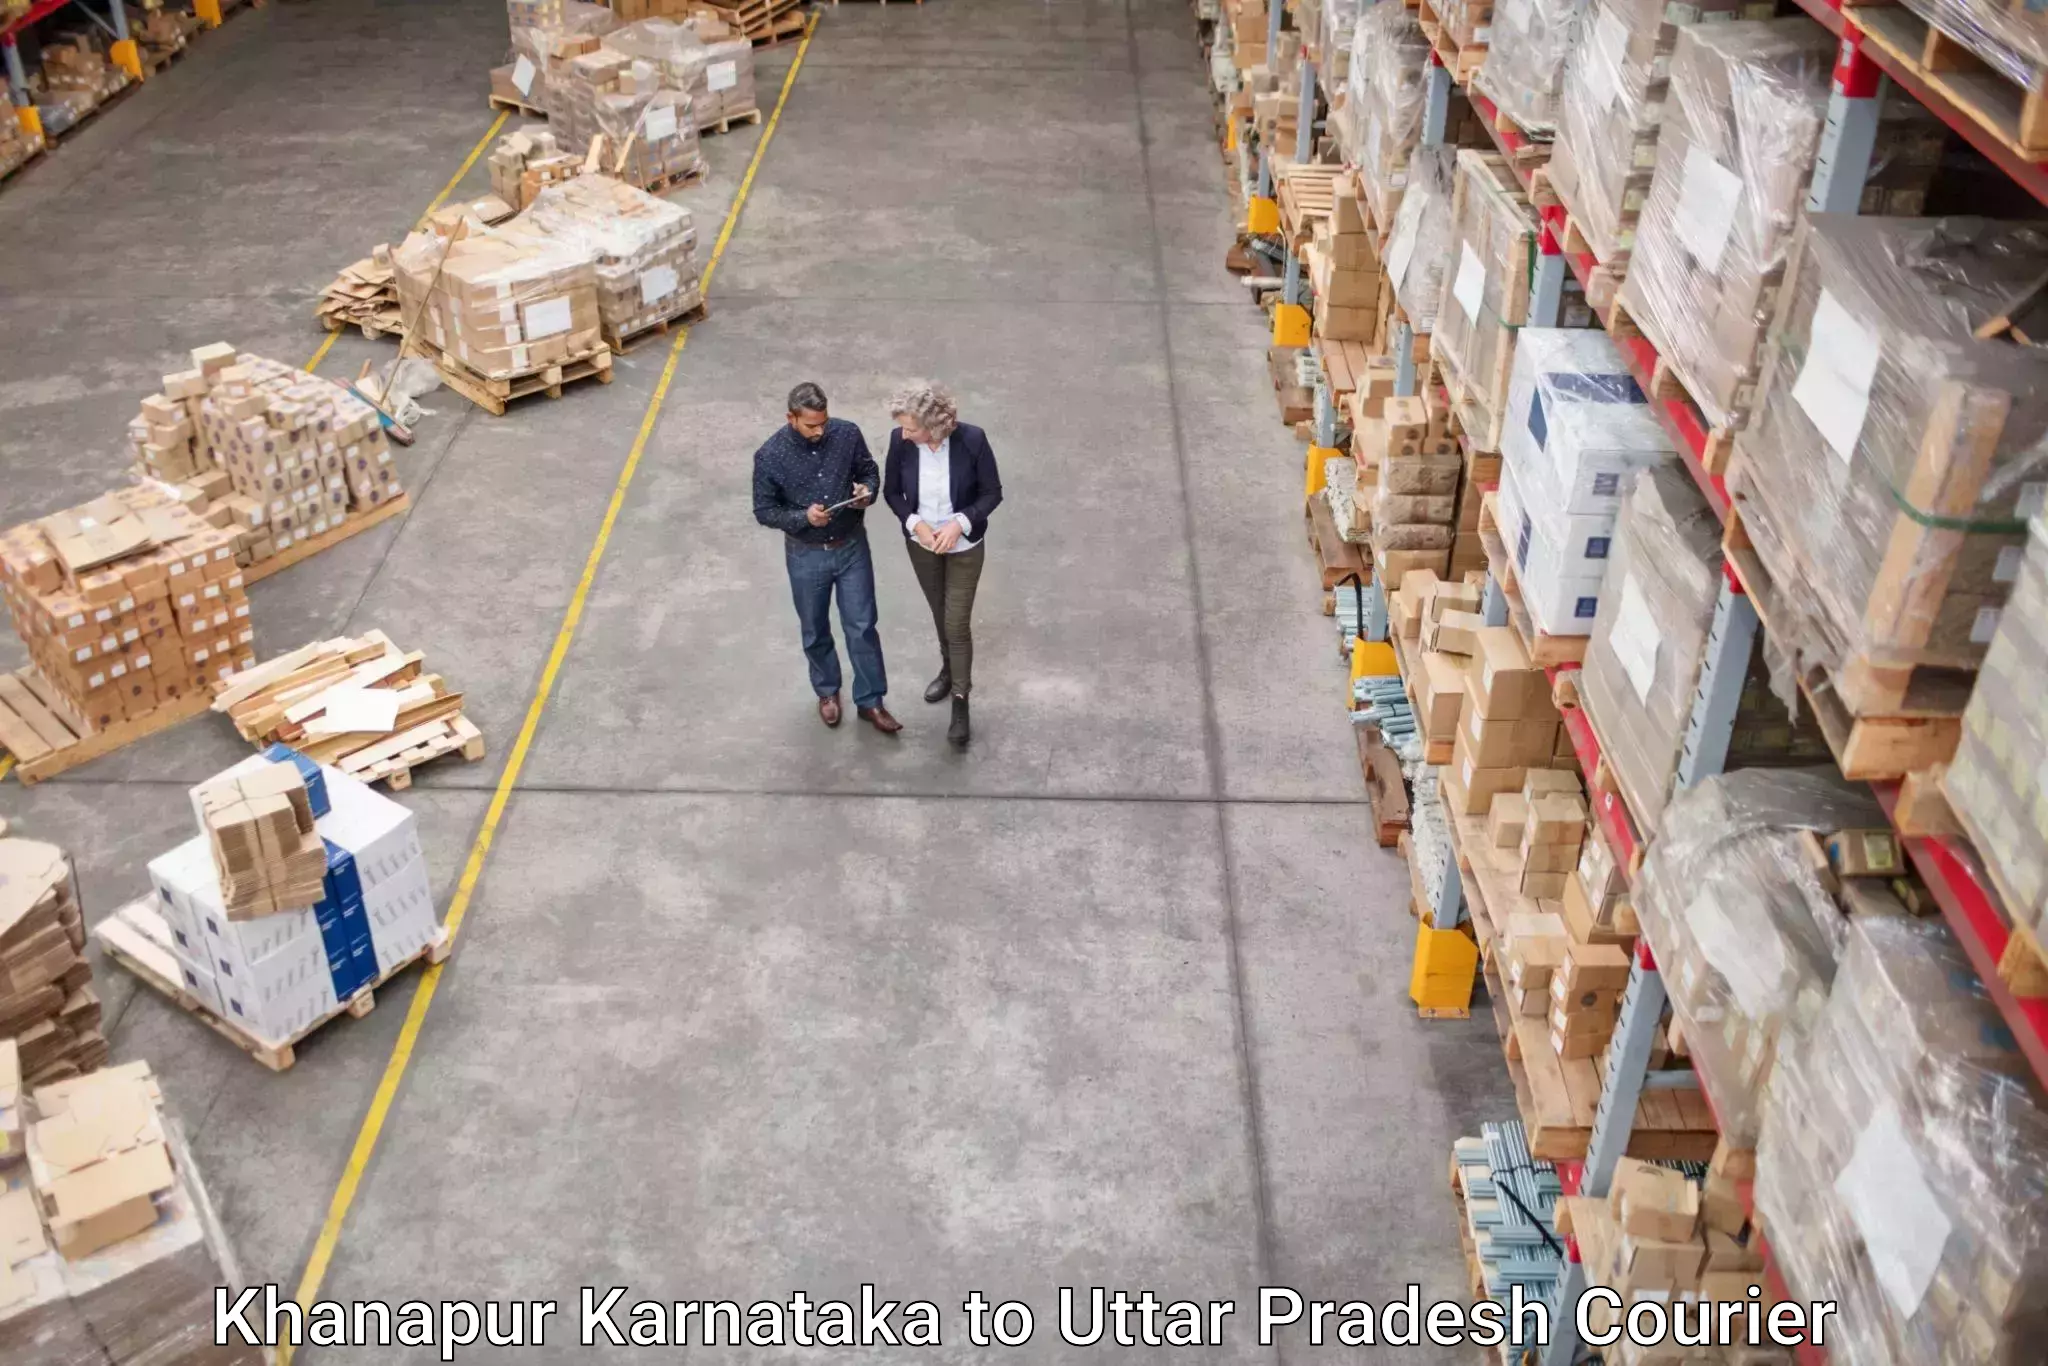 Premium courier solutions Khanapur Karnataka to Unnao